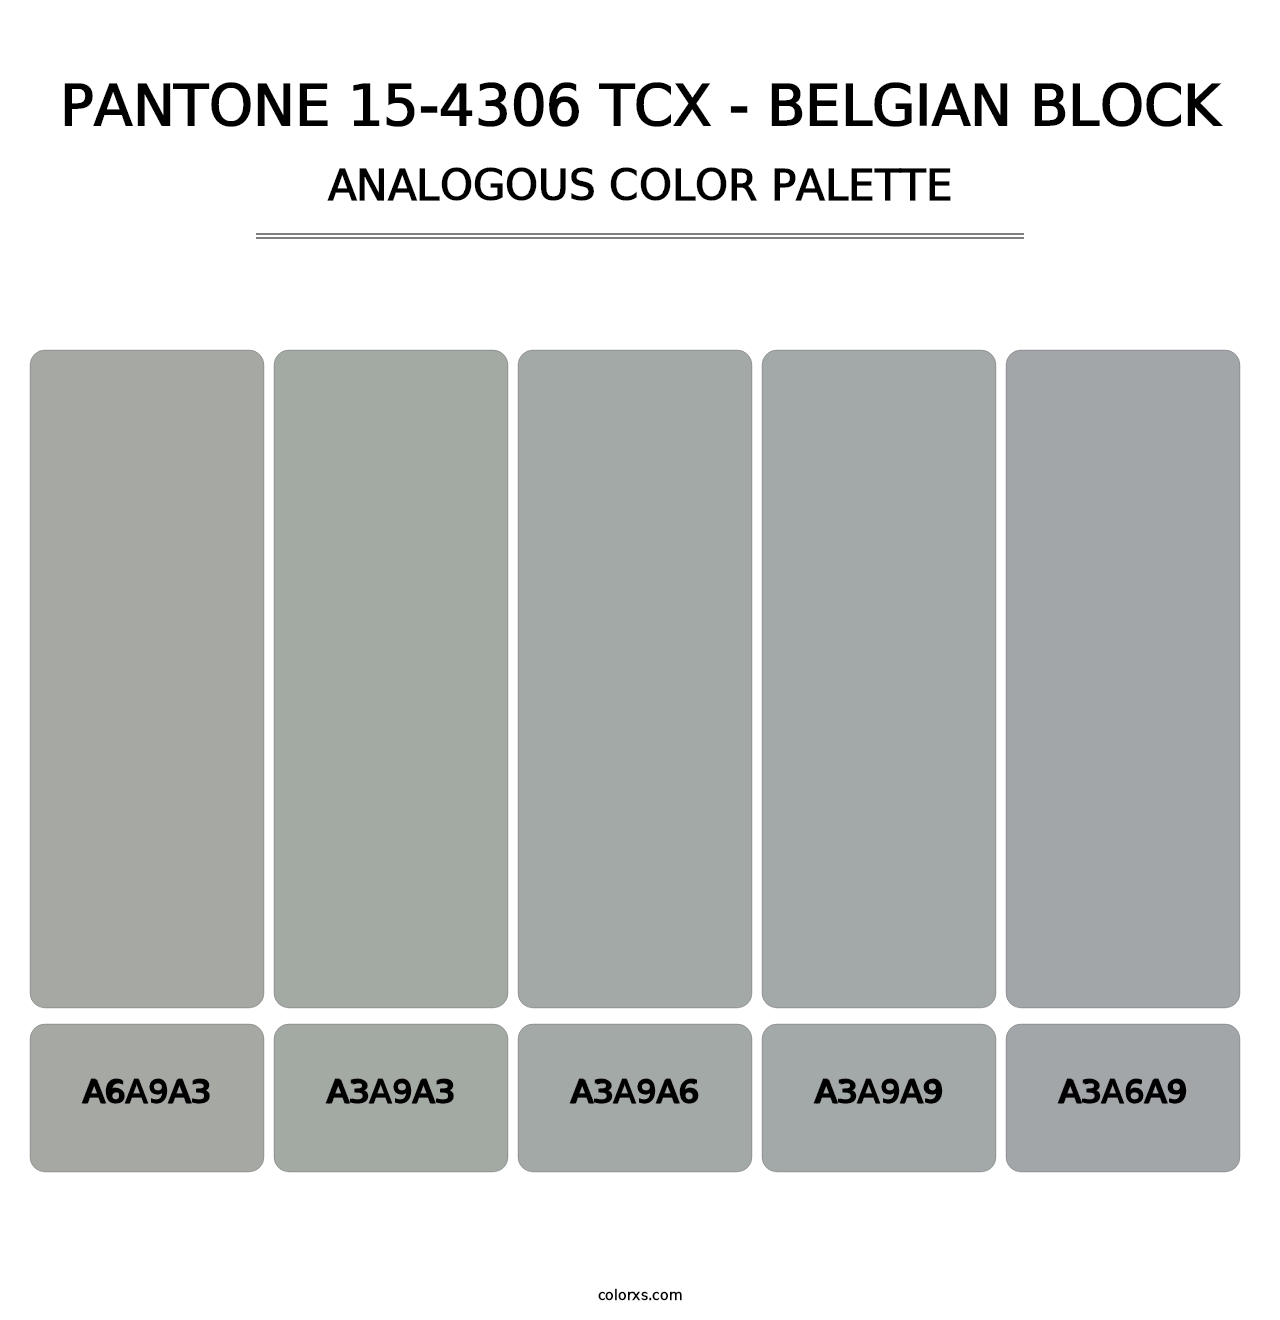 PANTONE 15-4306 TCX - Belgian Block - Analogous Color Palette